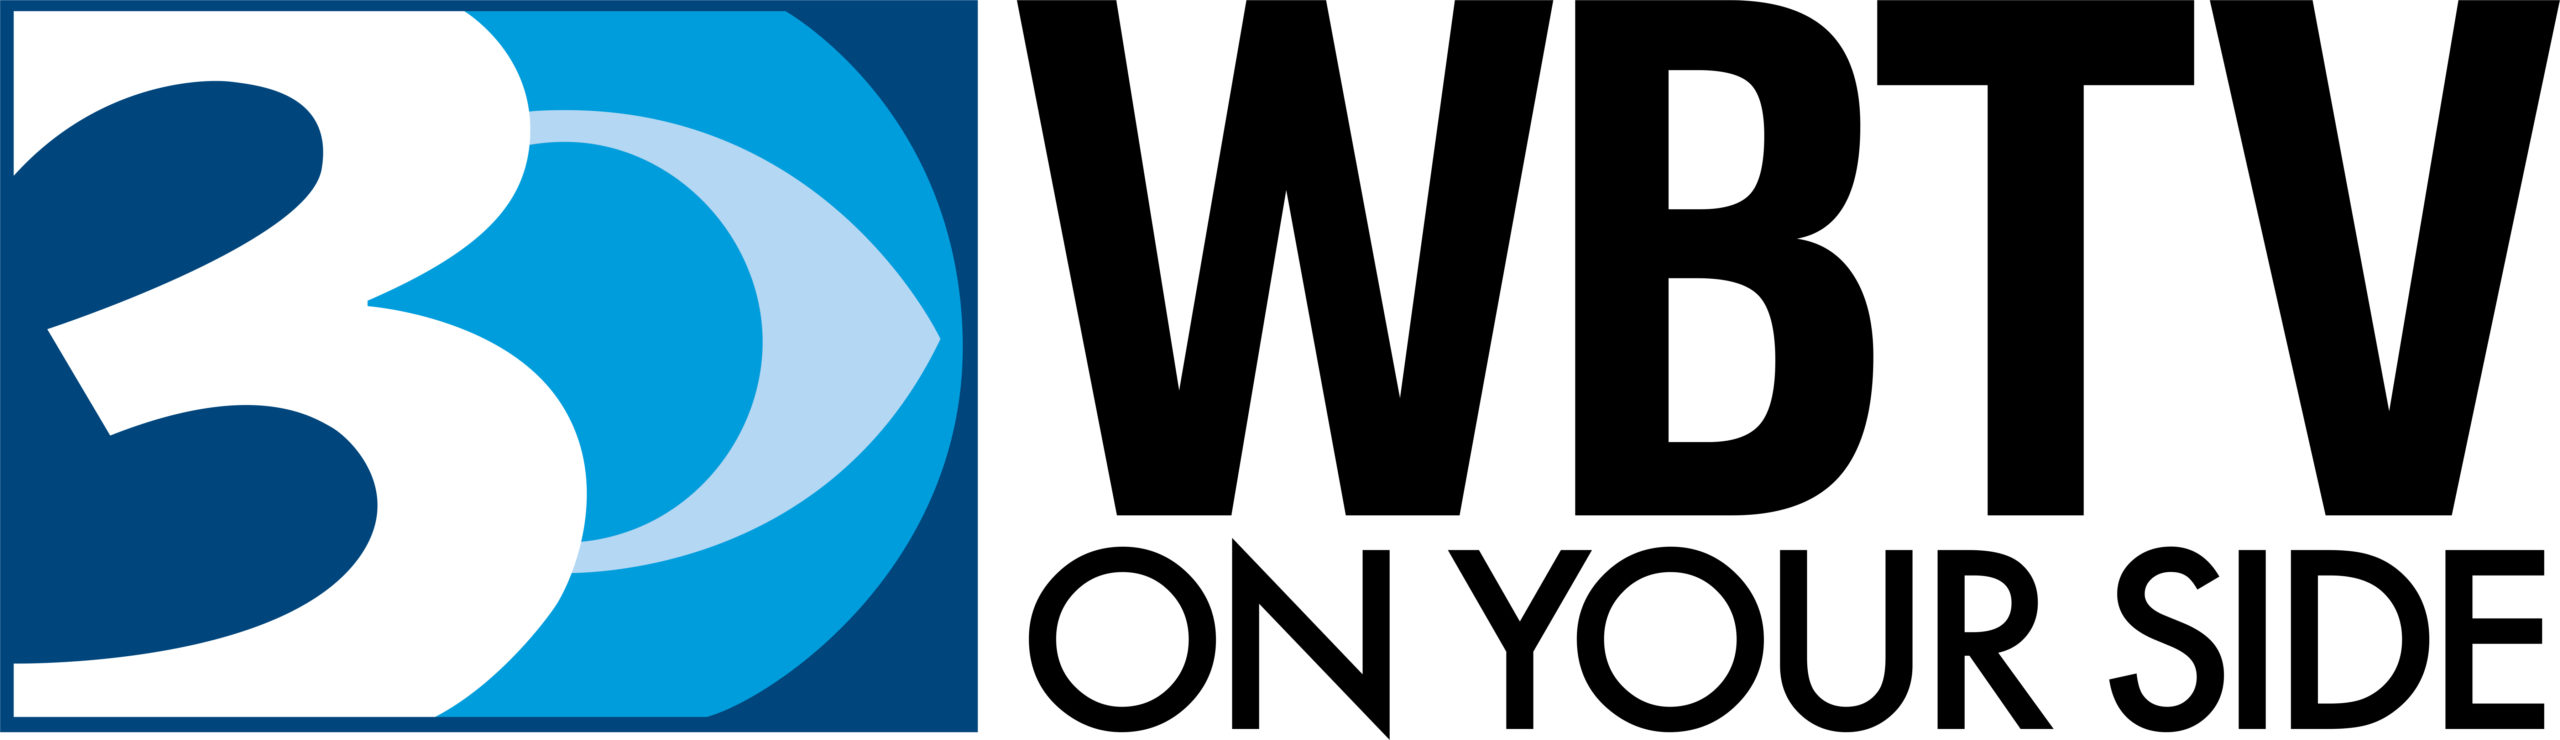 WBTV logo